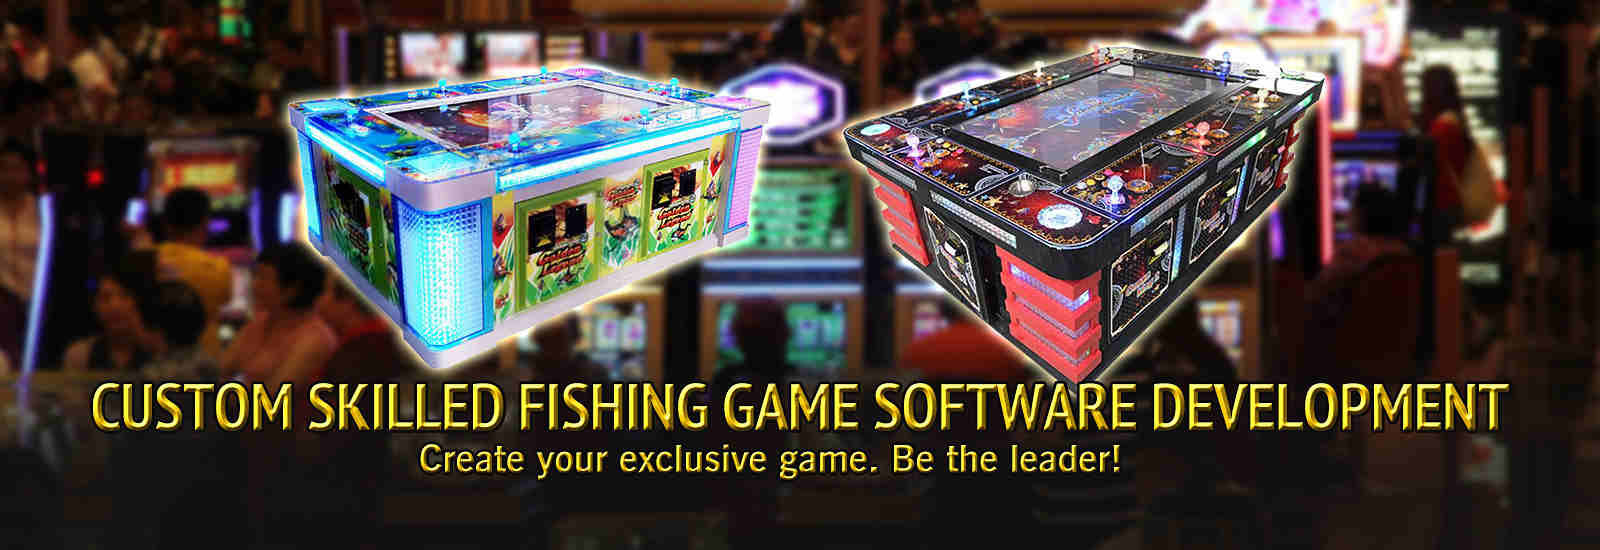 quality Fish Hunter Arcade Machine factory